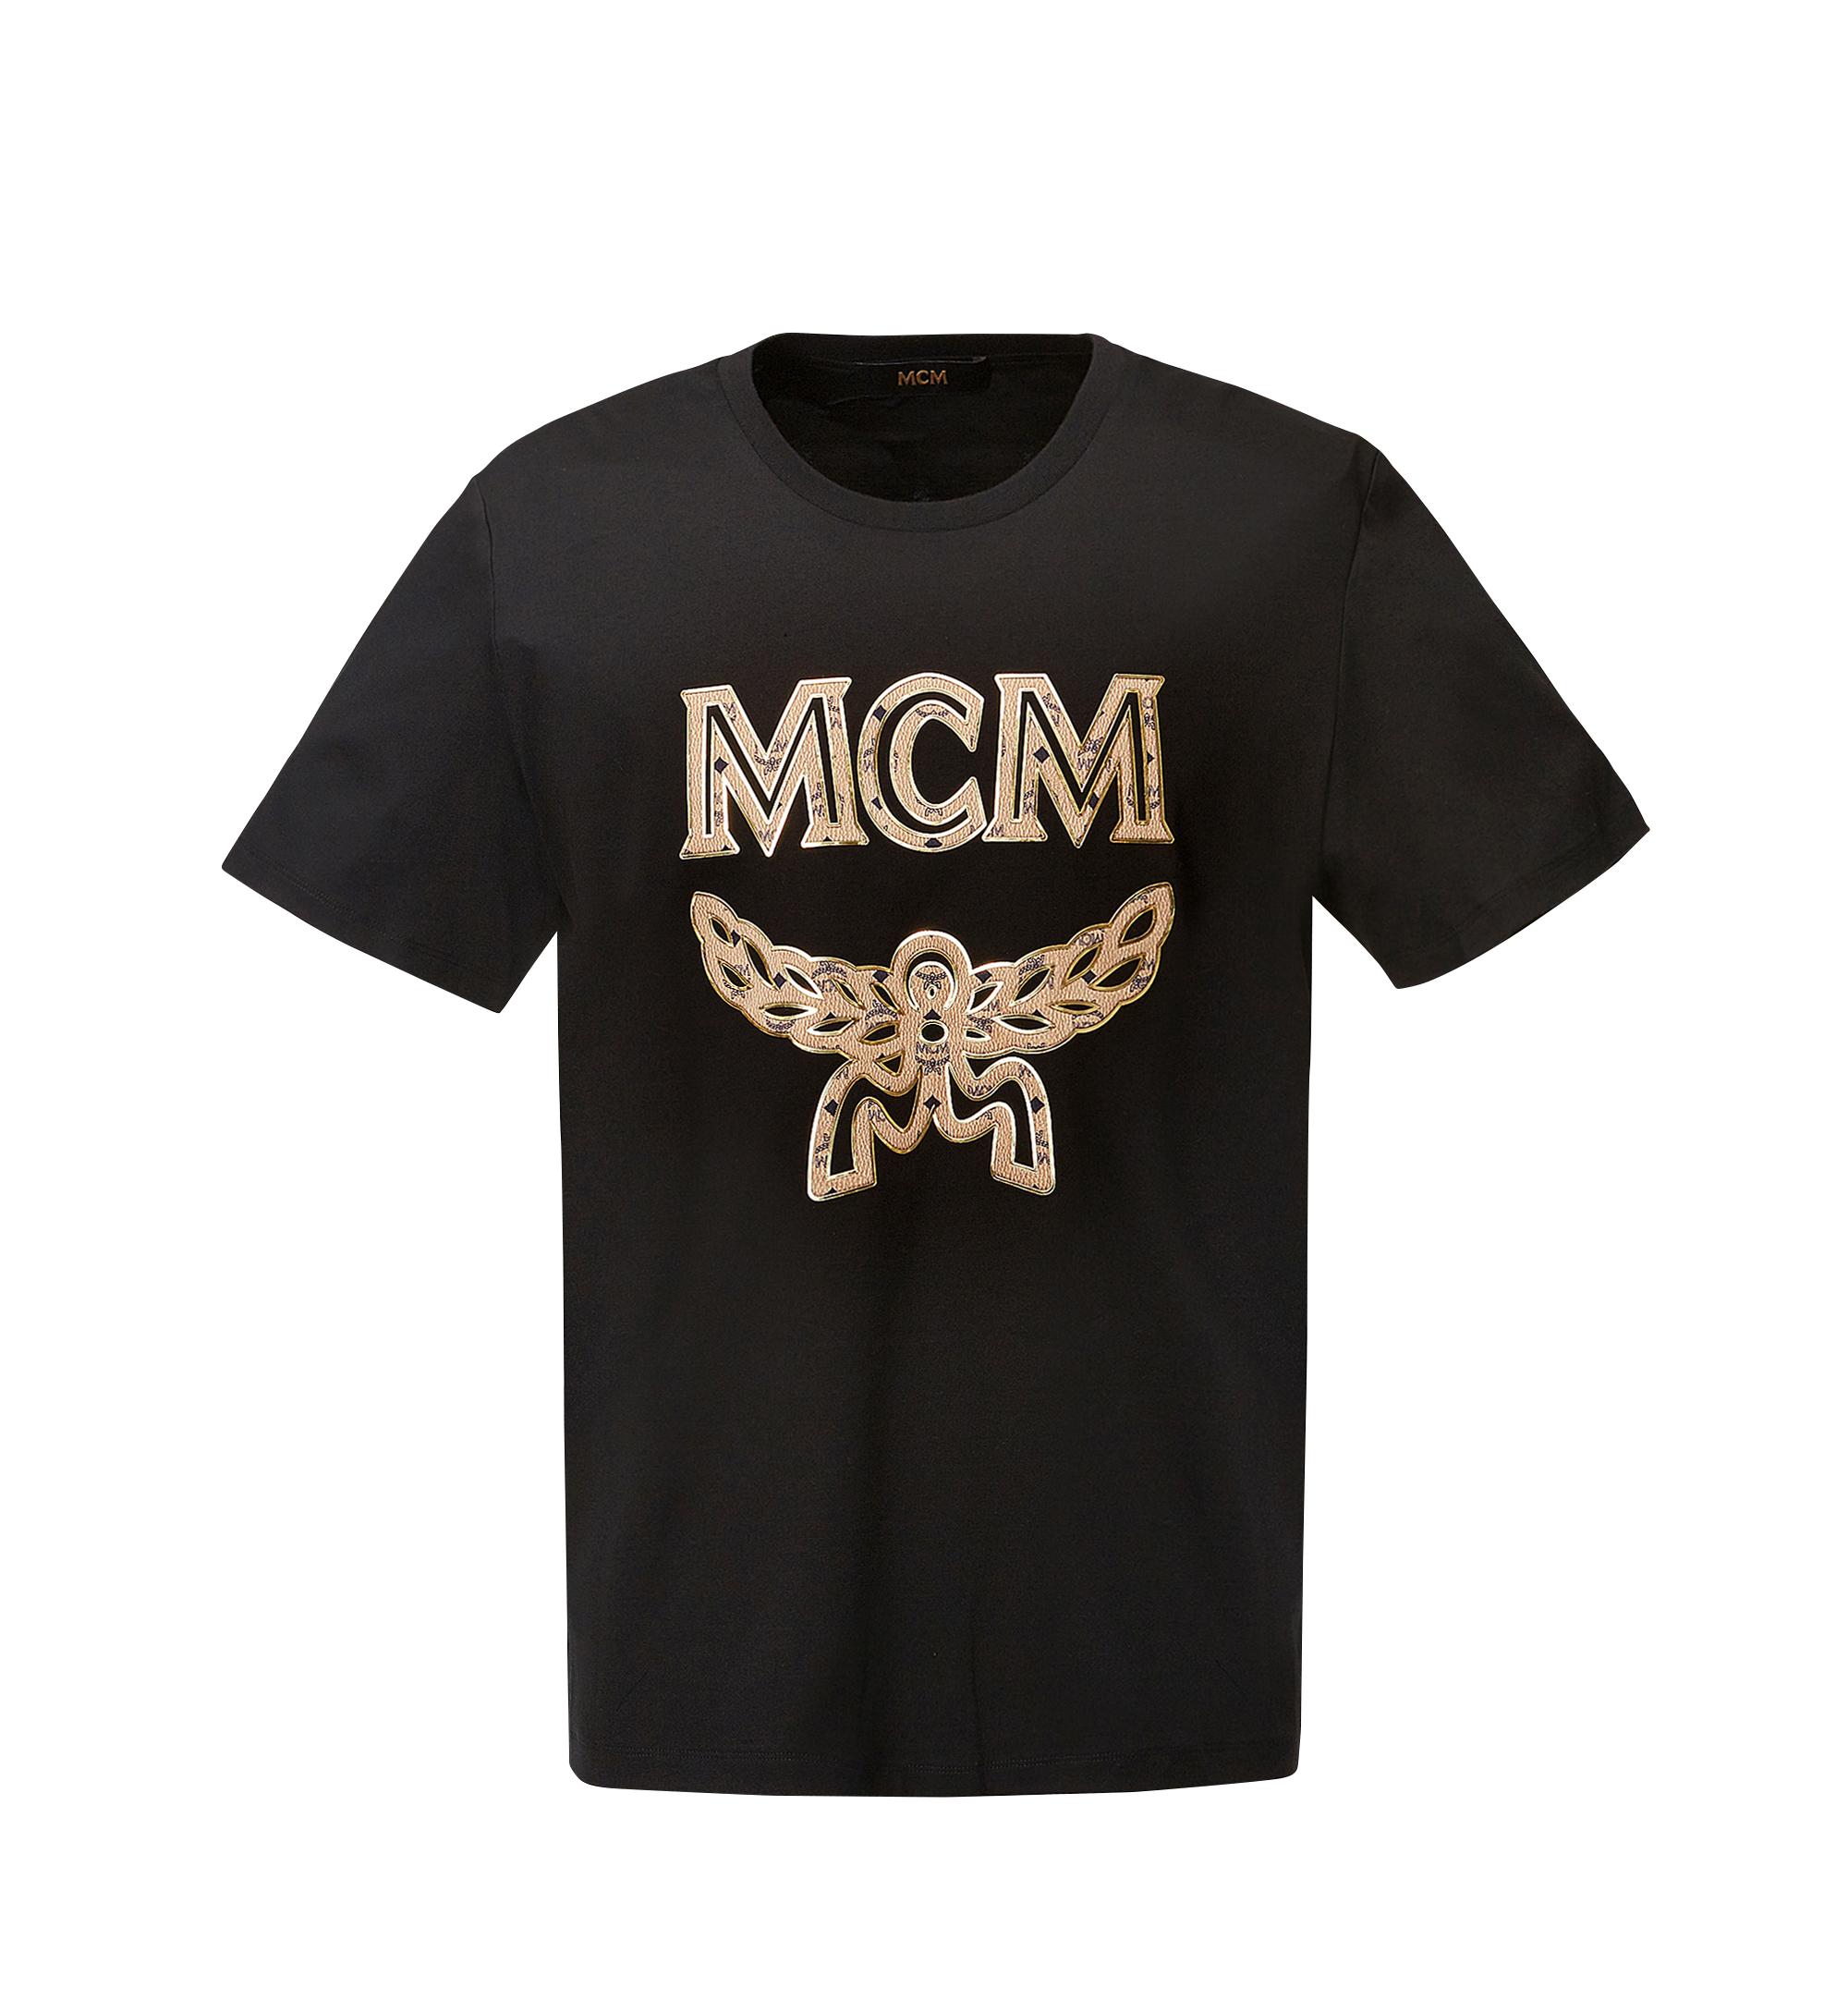 MCM Metallic - Trimmed Logo Appliqué Tee in bk (Black) for Men - Lyst